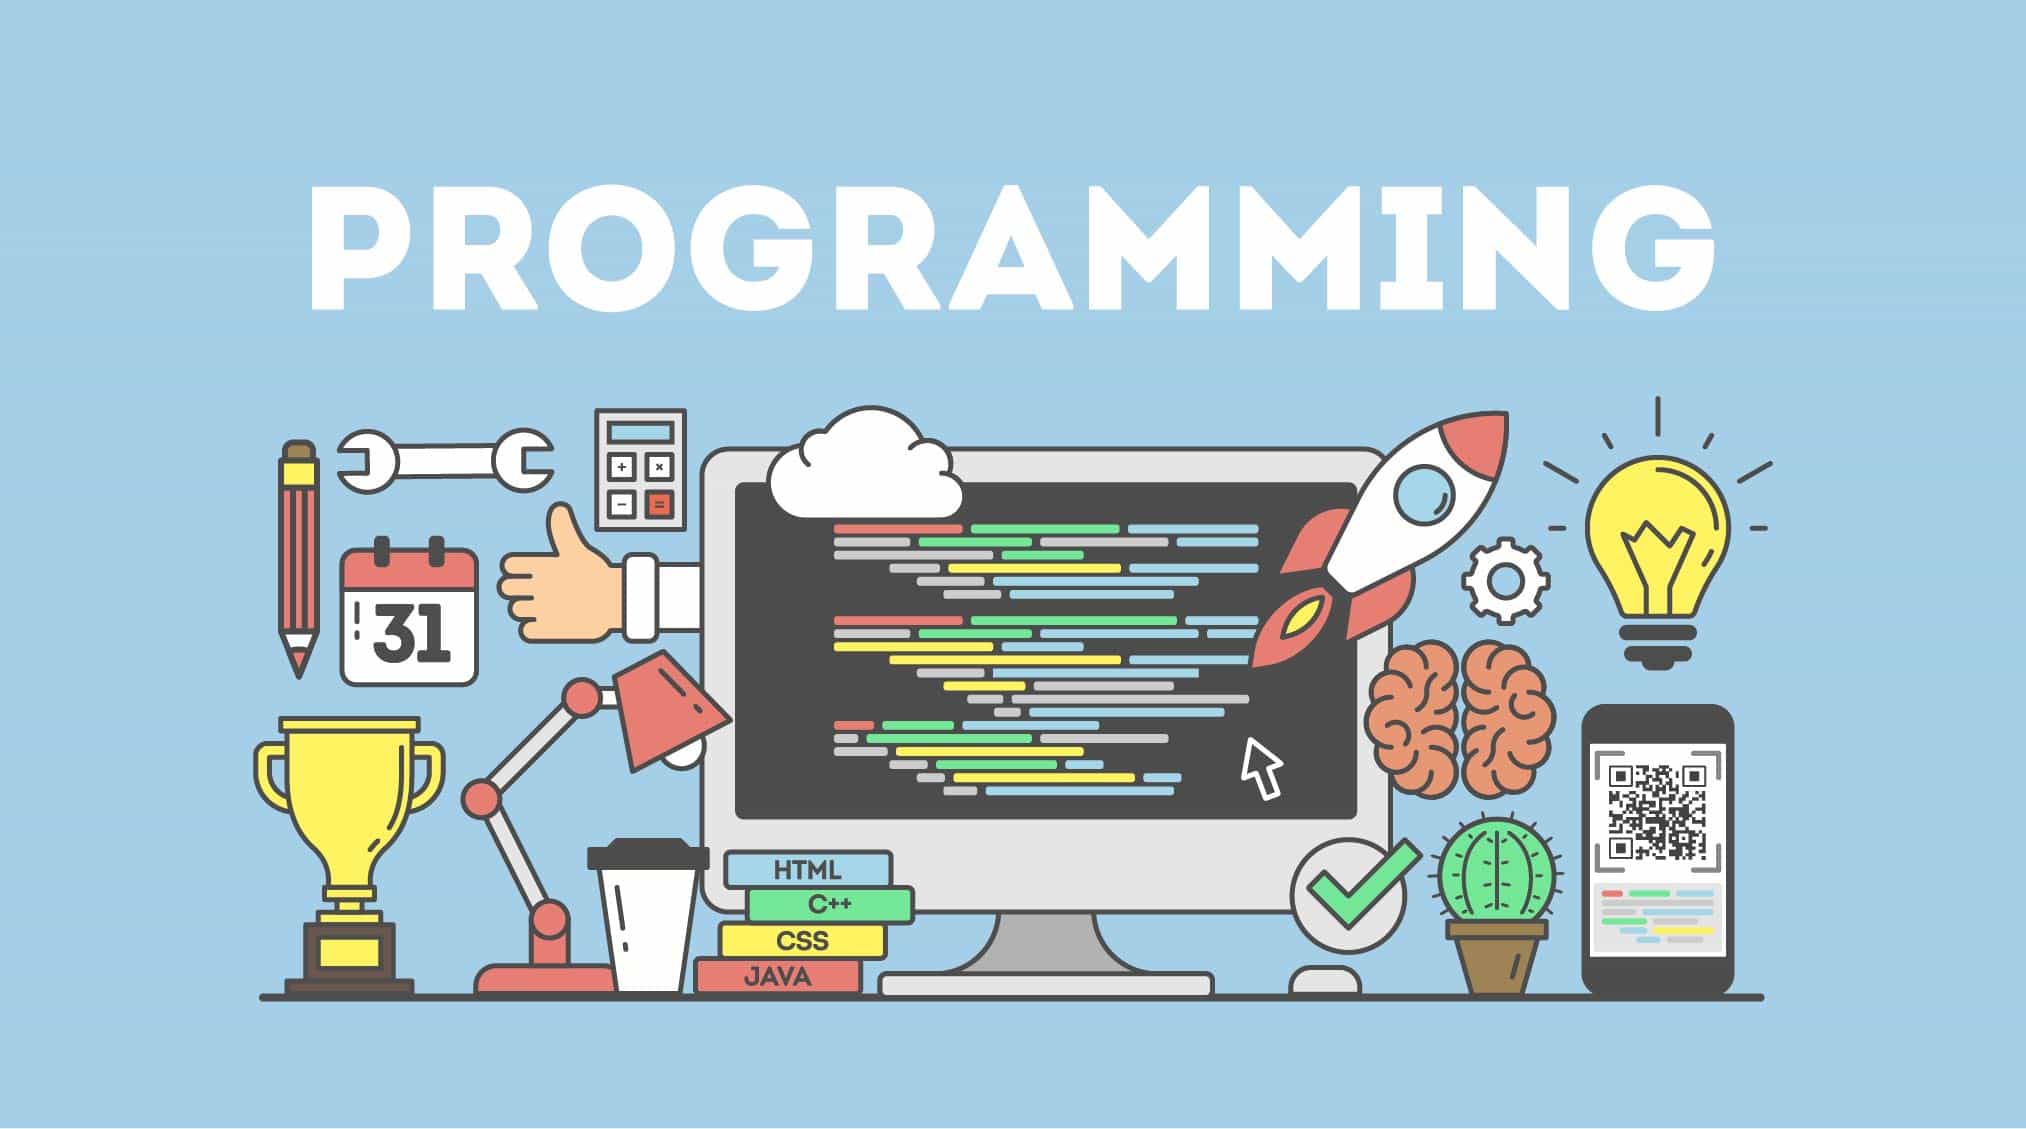 Programming streams. Программирование иллюстрация. Flat иллюстрации программирование. Языки программирования иллюстрация. Основы программирования рисунок.